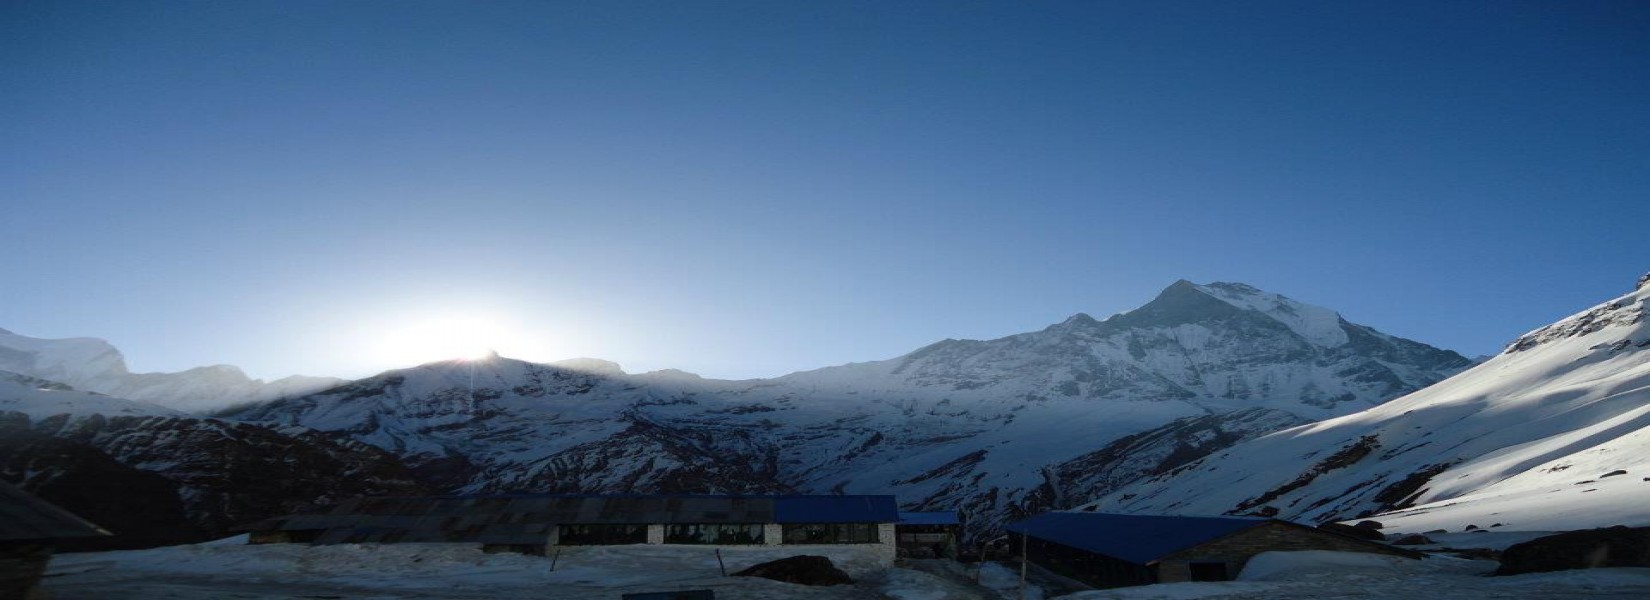 Luxury Annapurna Base Camp Trek with 5 Star Accommodation